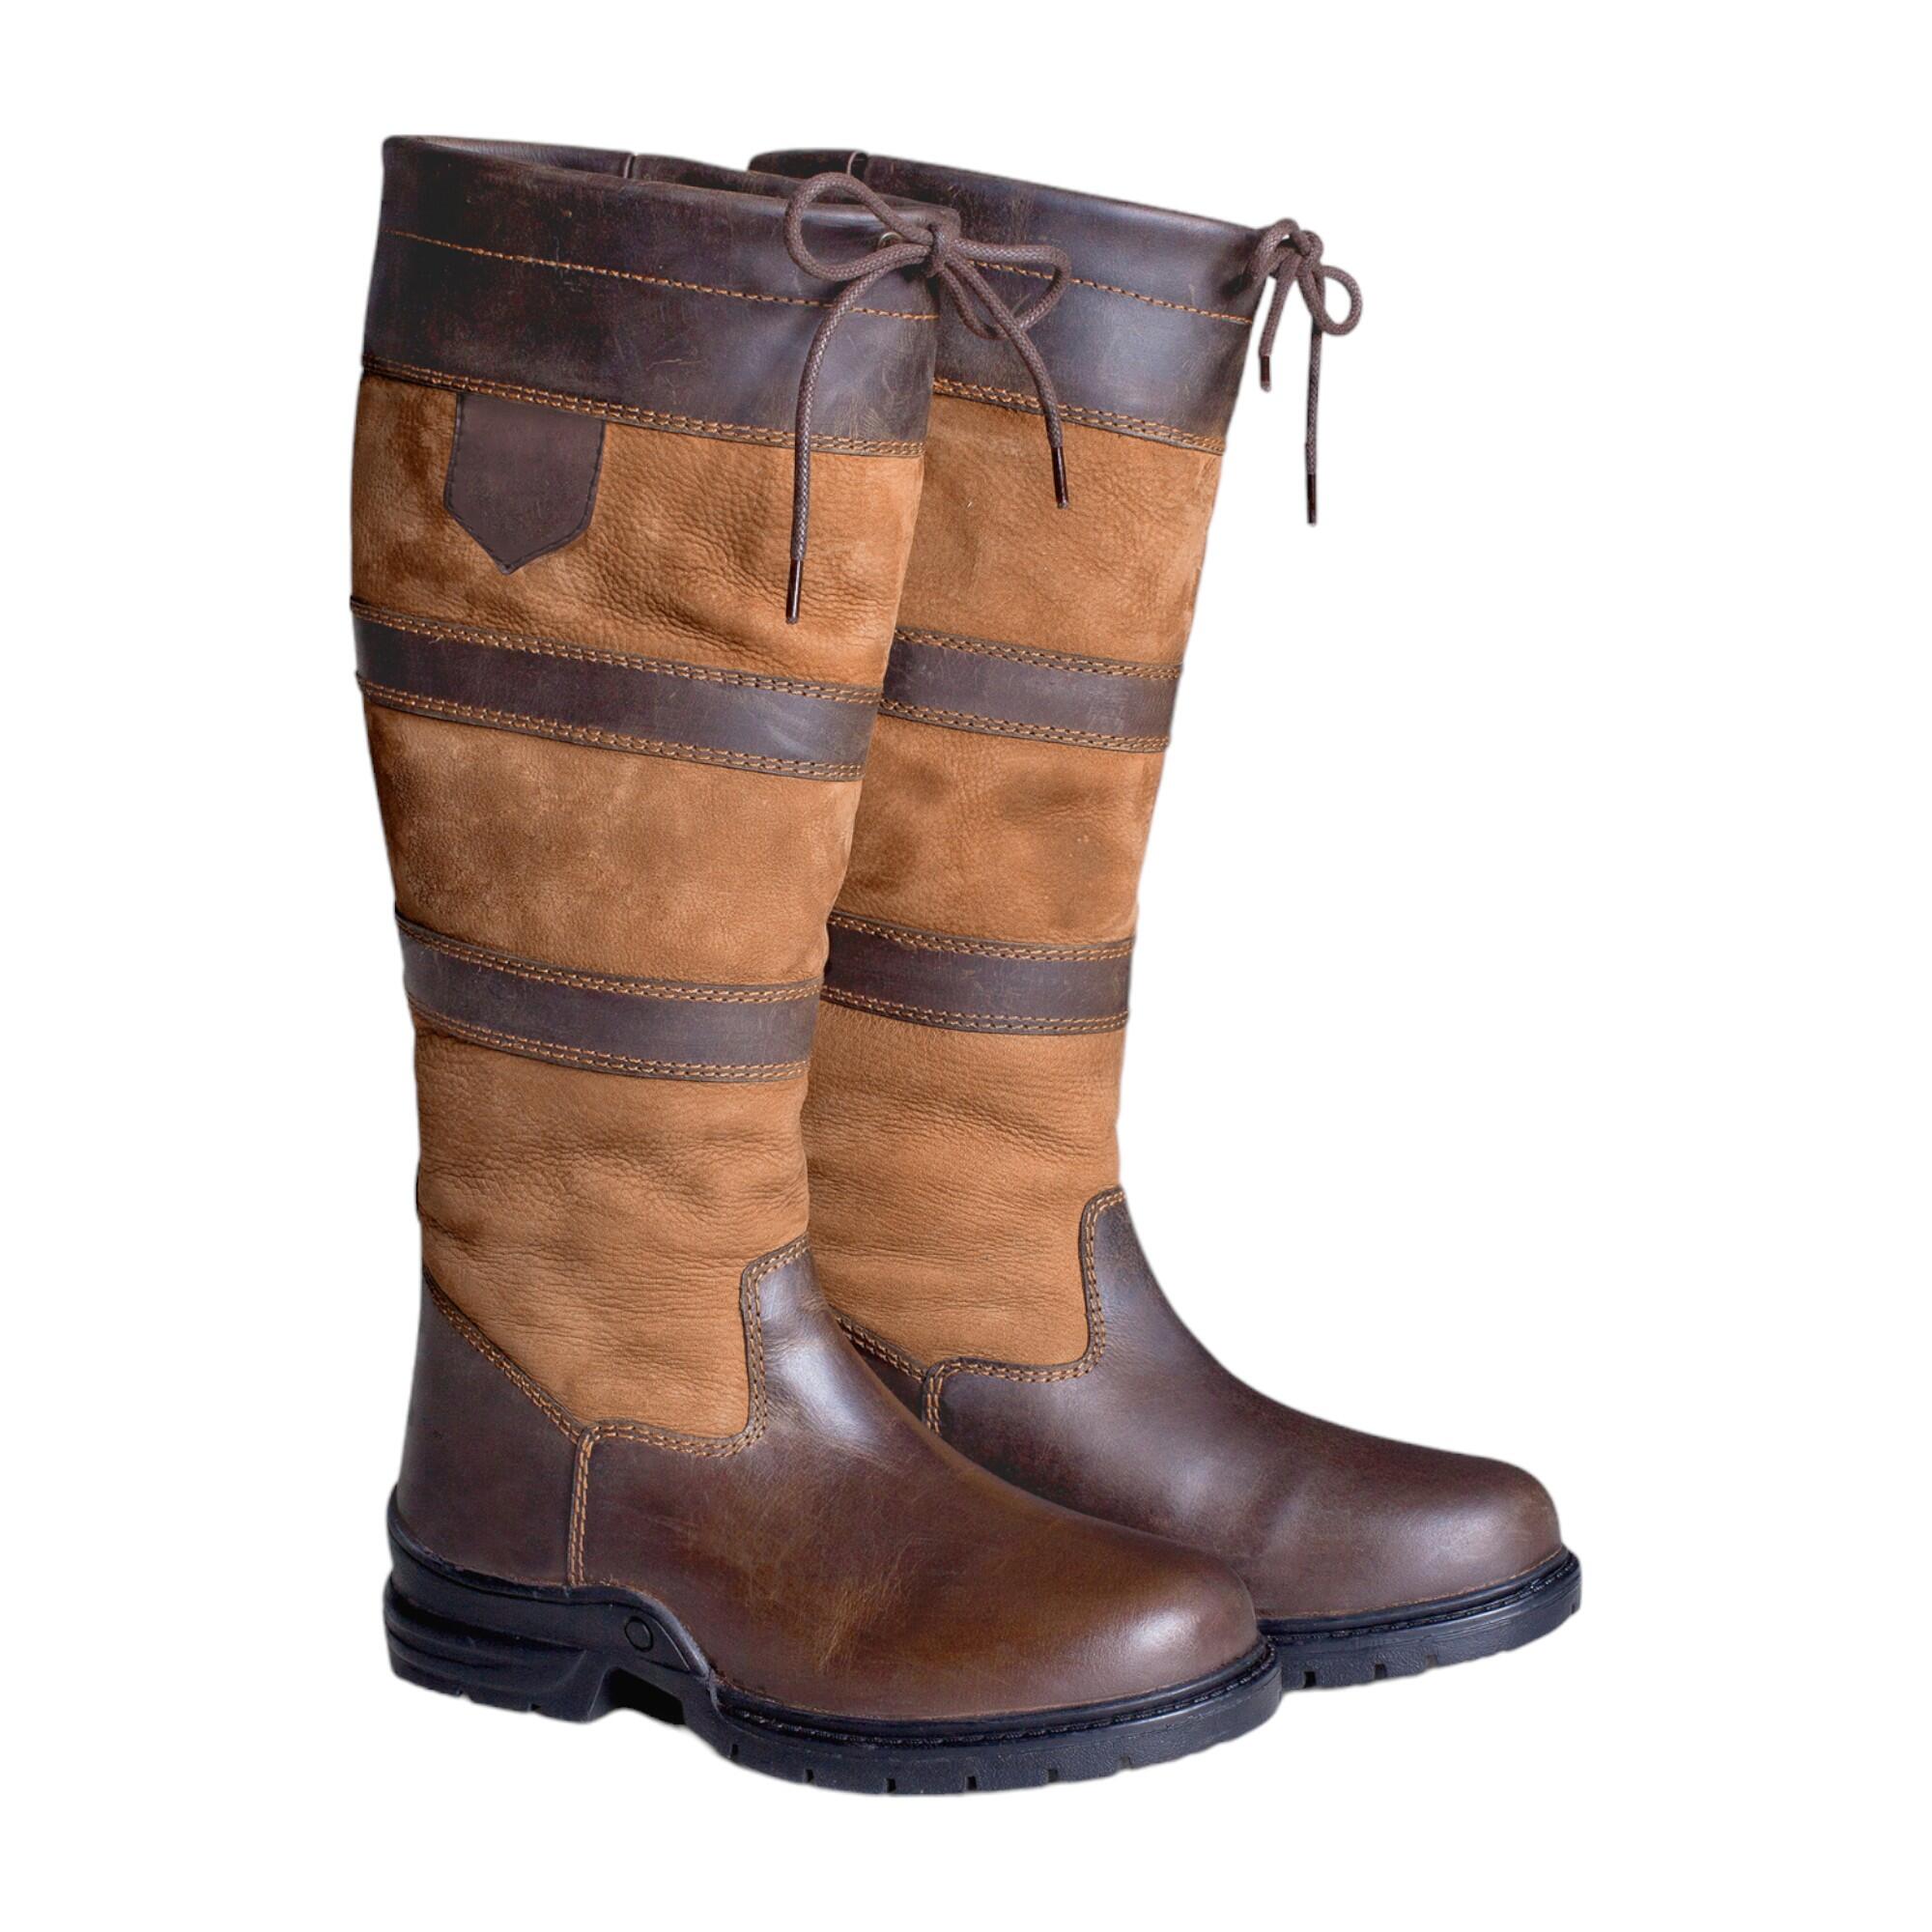 Women's Wellington boots